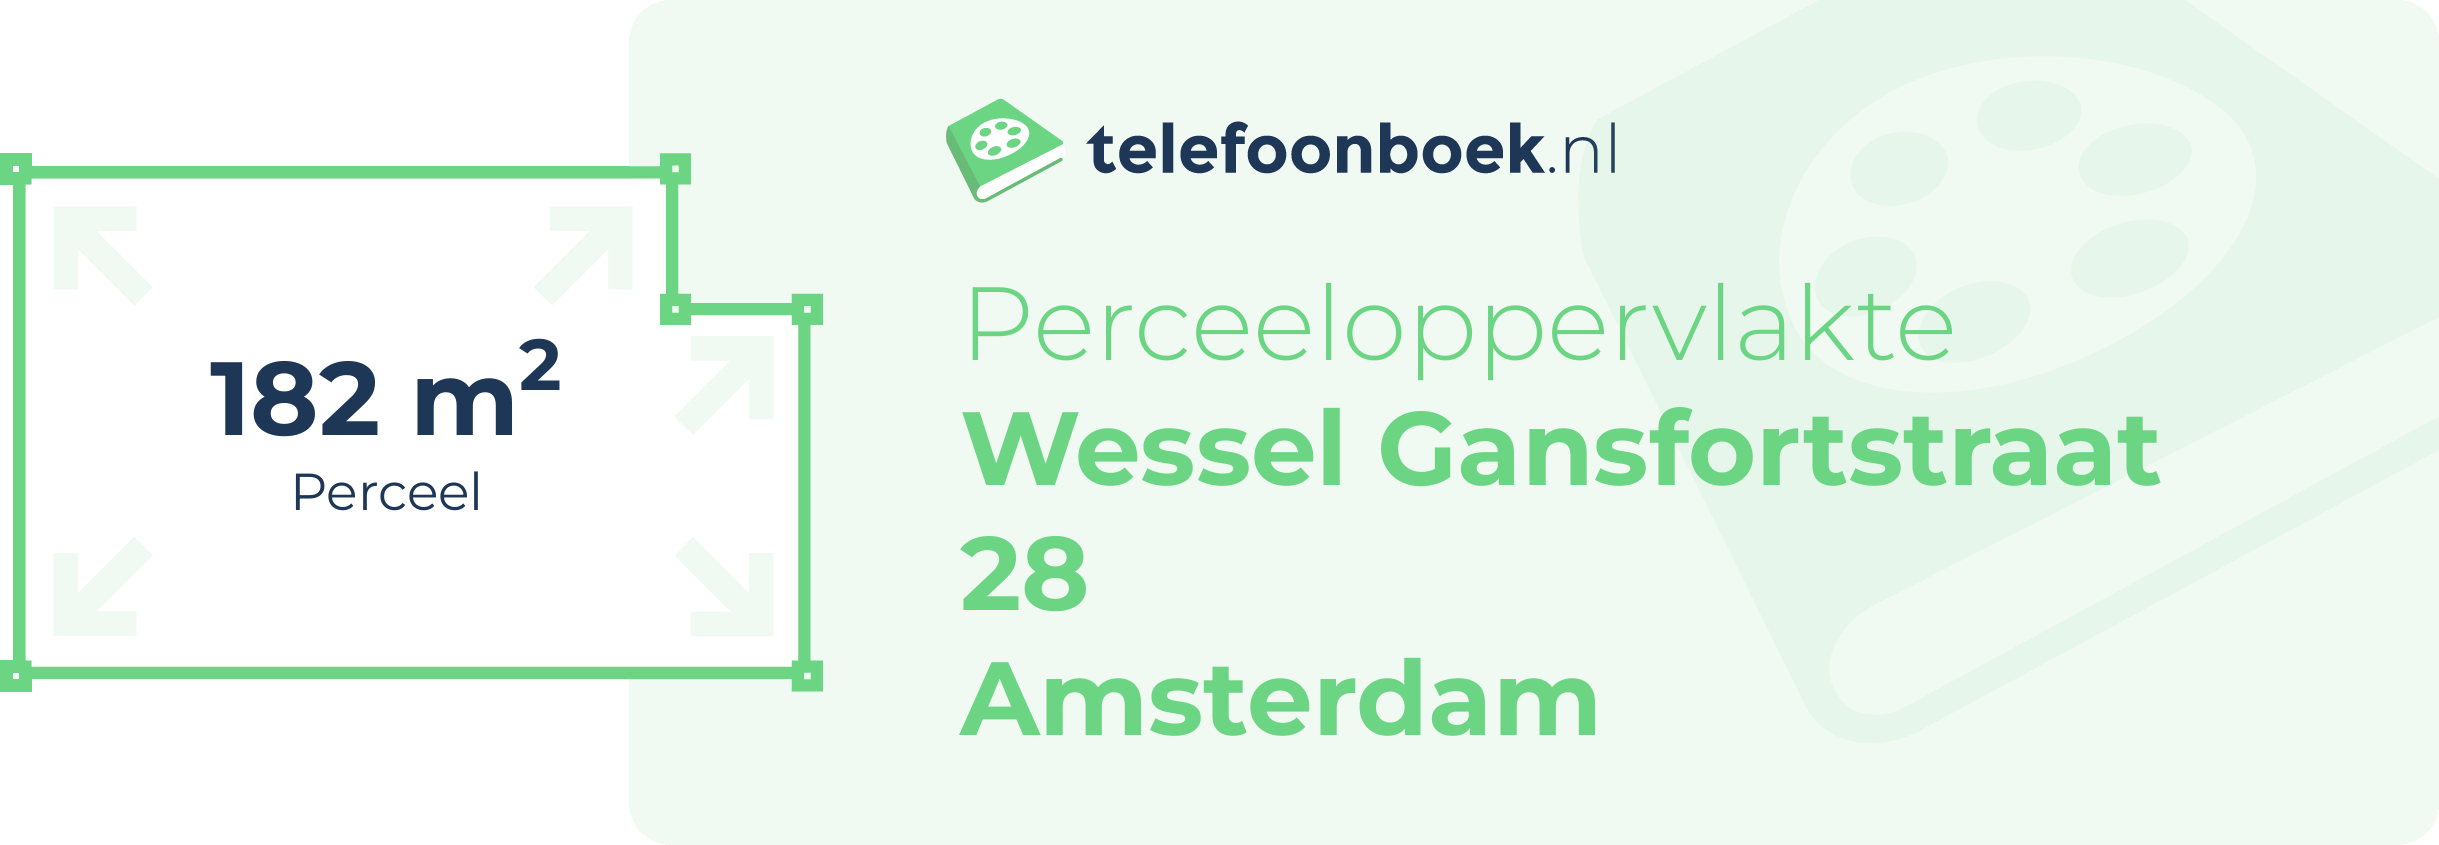 Perceeloppervlakte Wessel Gansfortstraat 28 Amsterdam